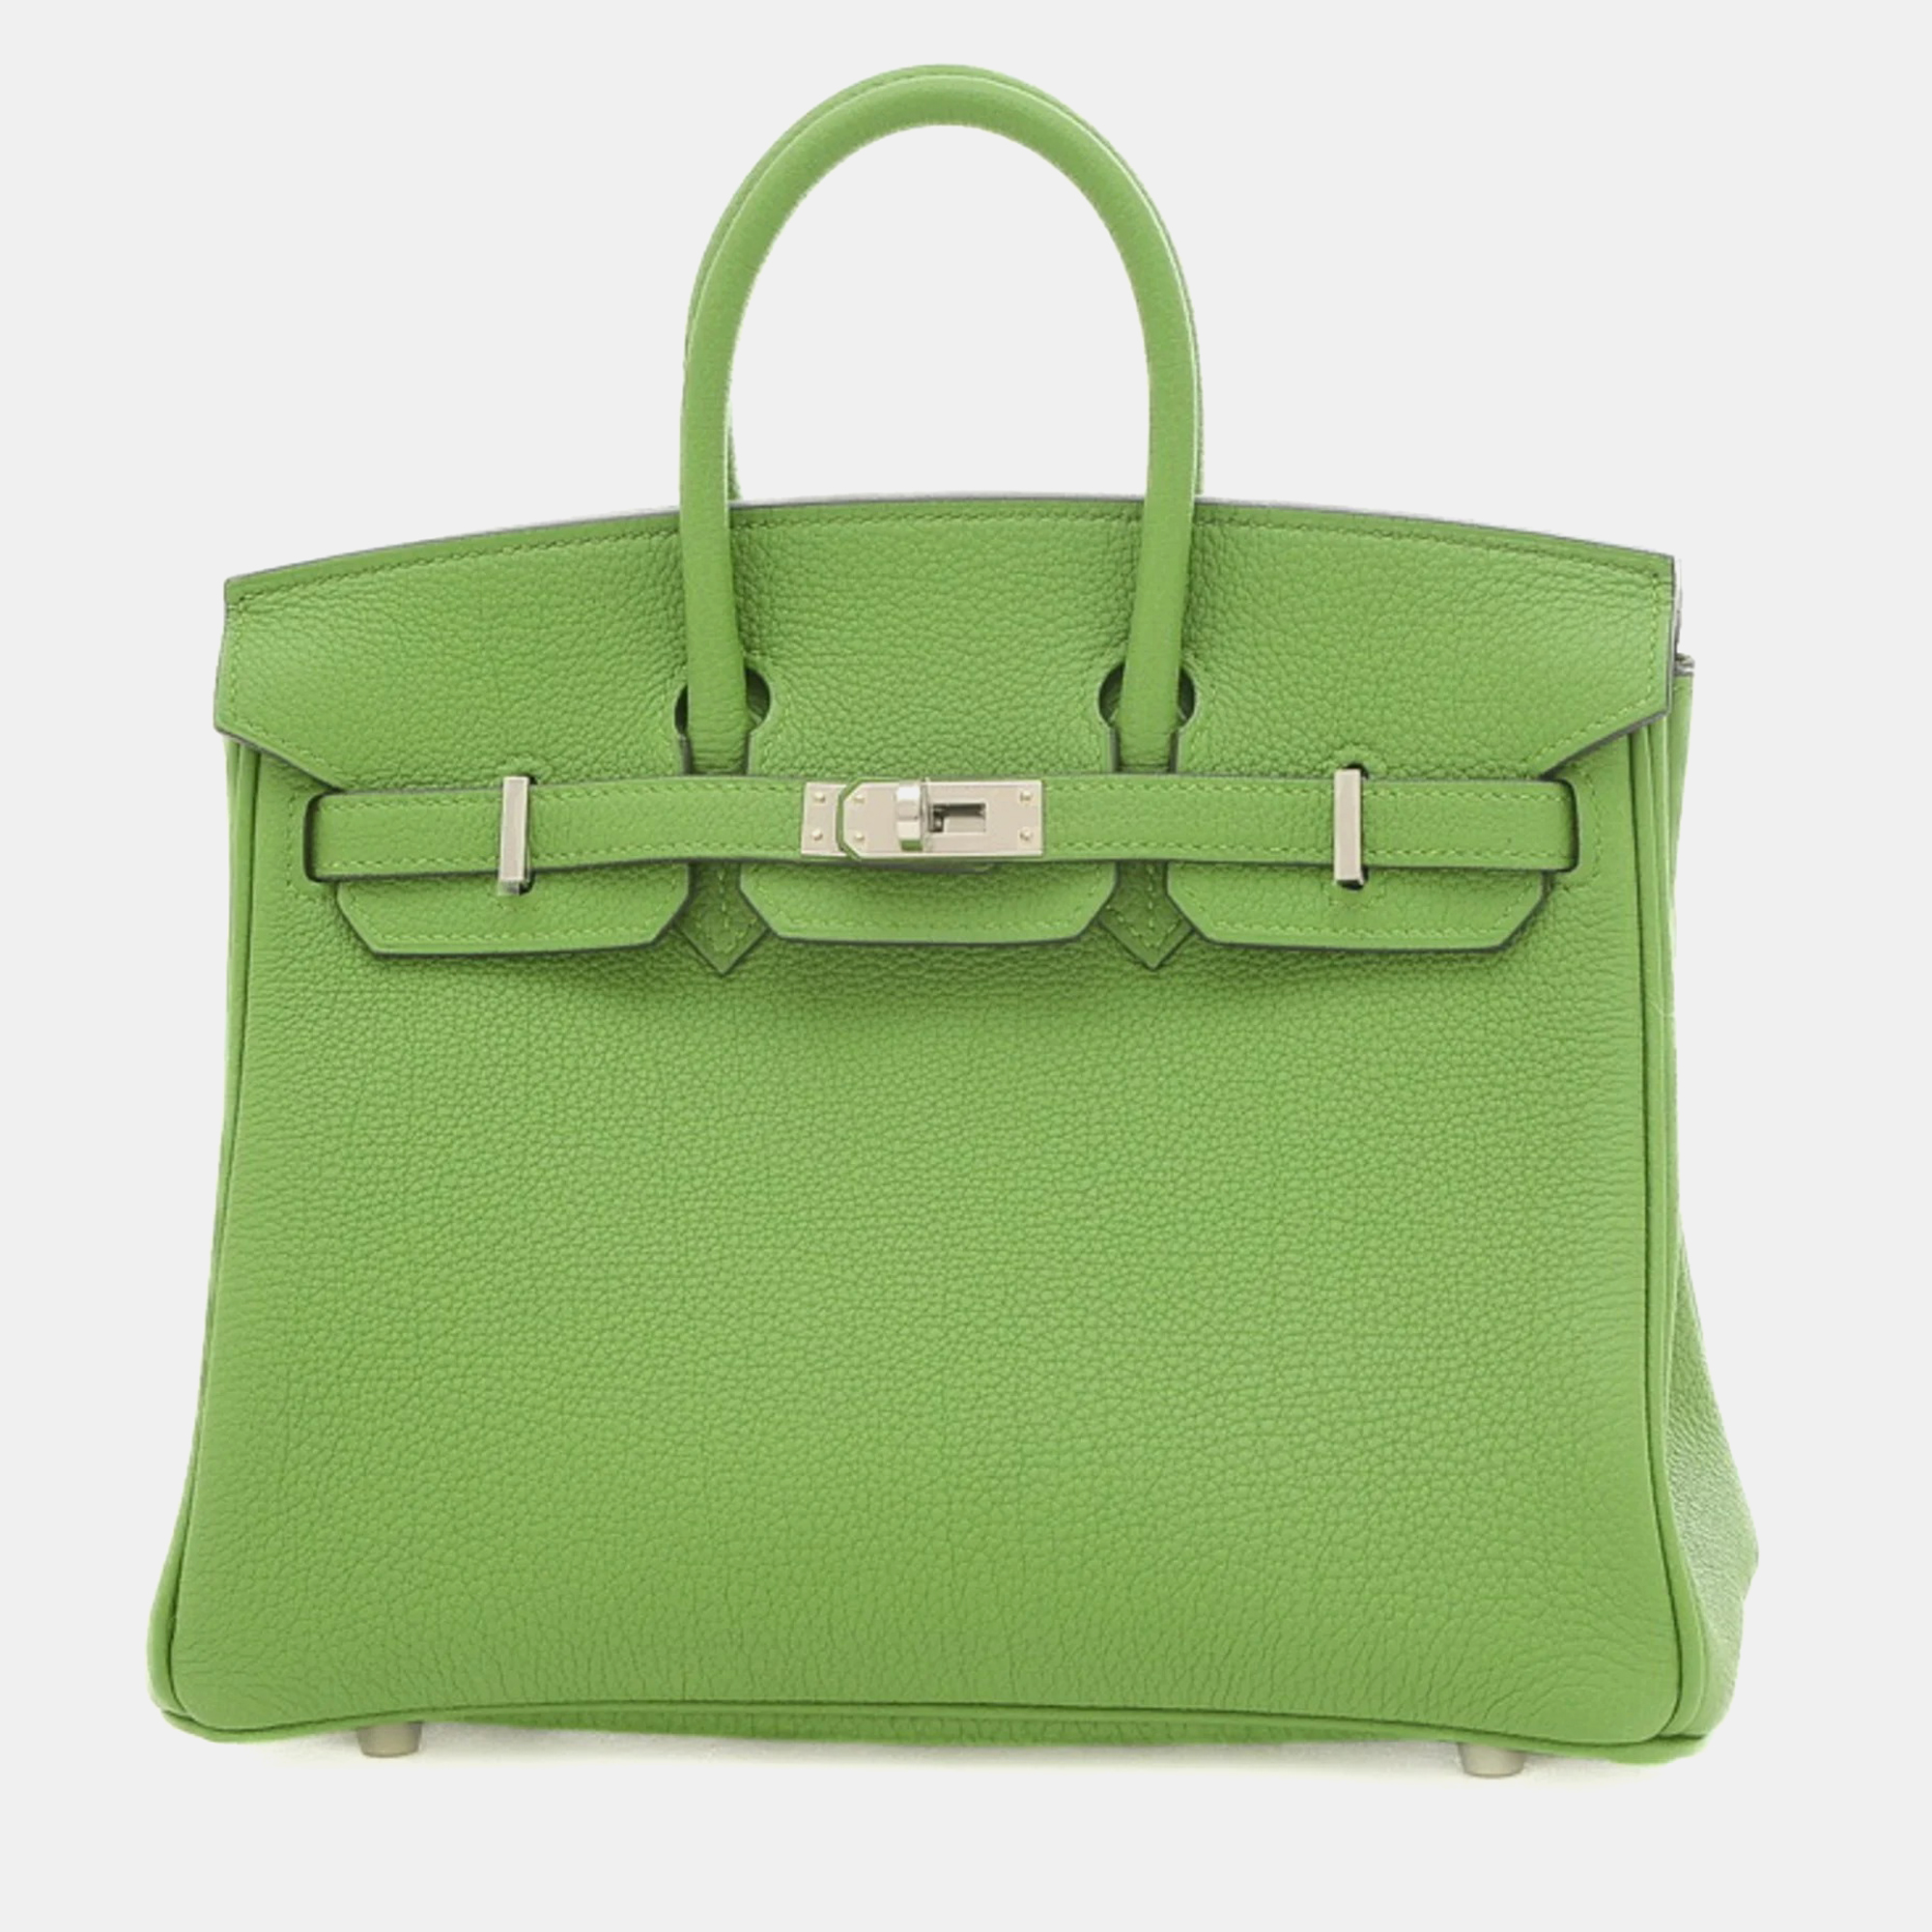 Hermes vert yucca togo birkin 25 handbag